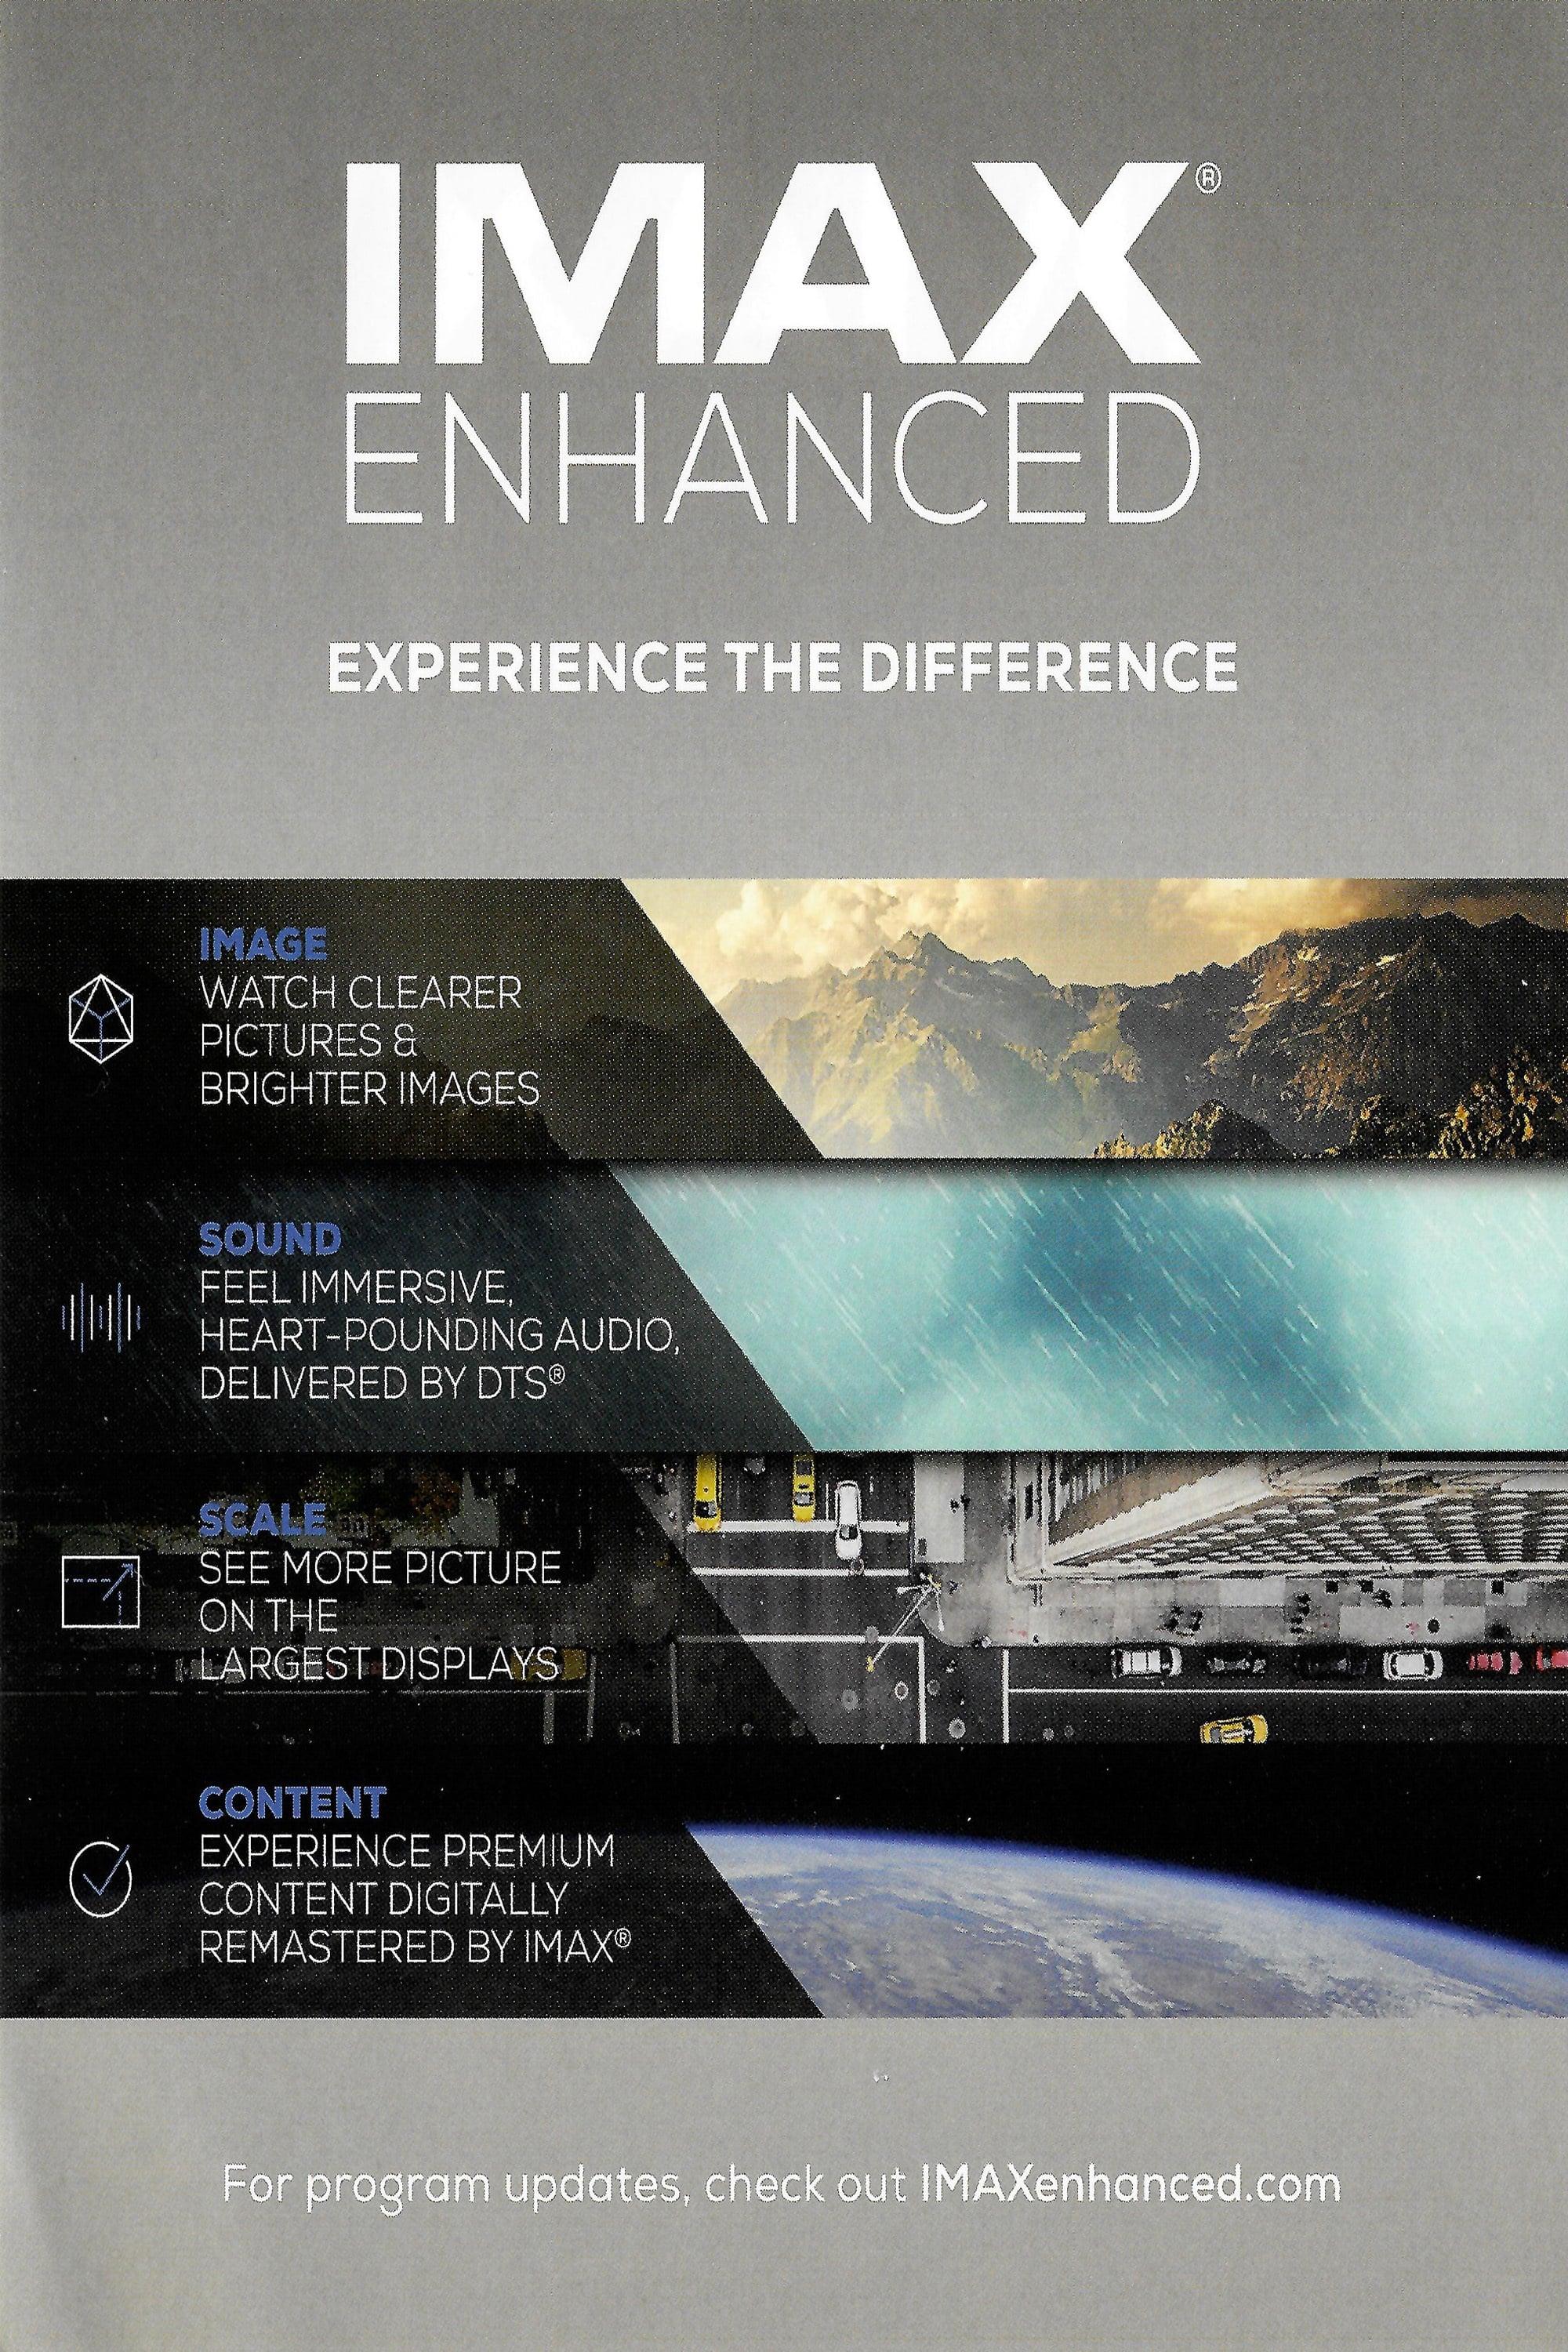 IMAX Enhanced Demo Content Vol. 1 poster